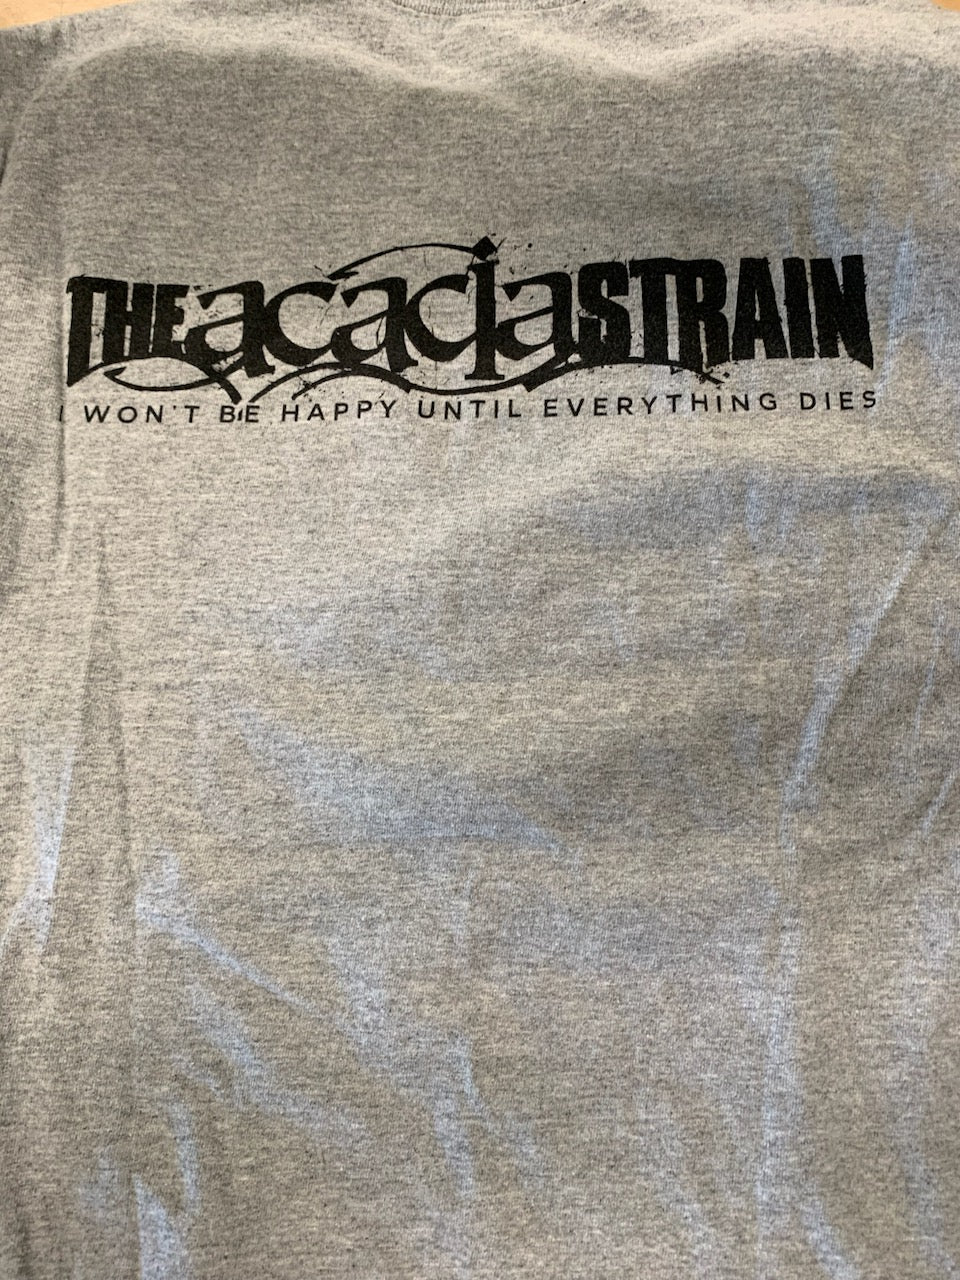 Acacia Strain Nightman T-shirt, Light Gray, M